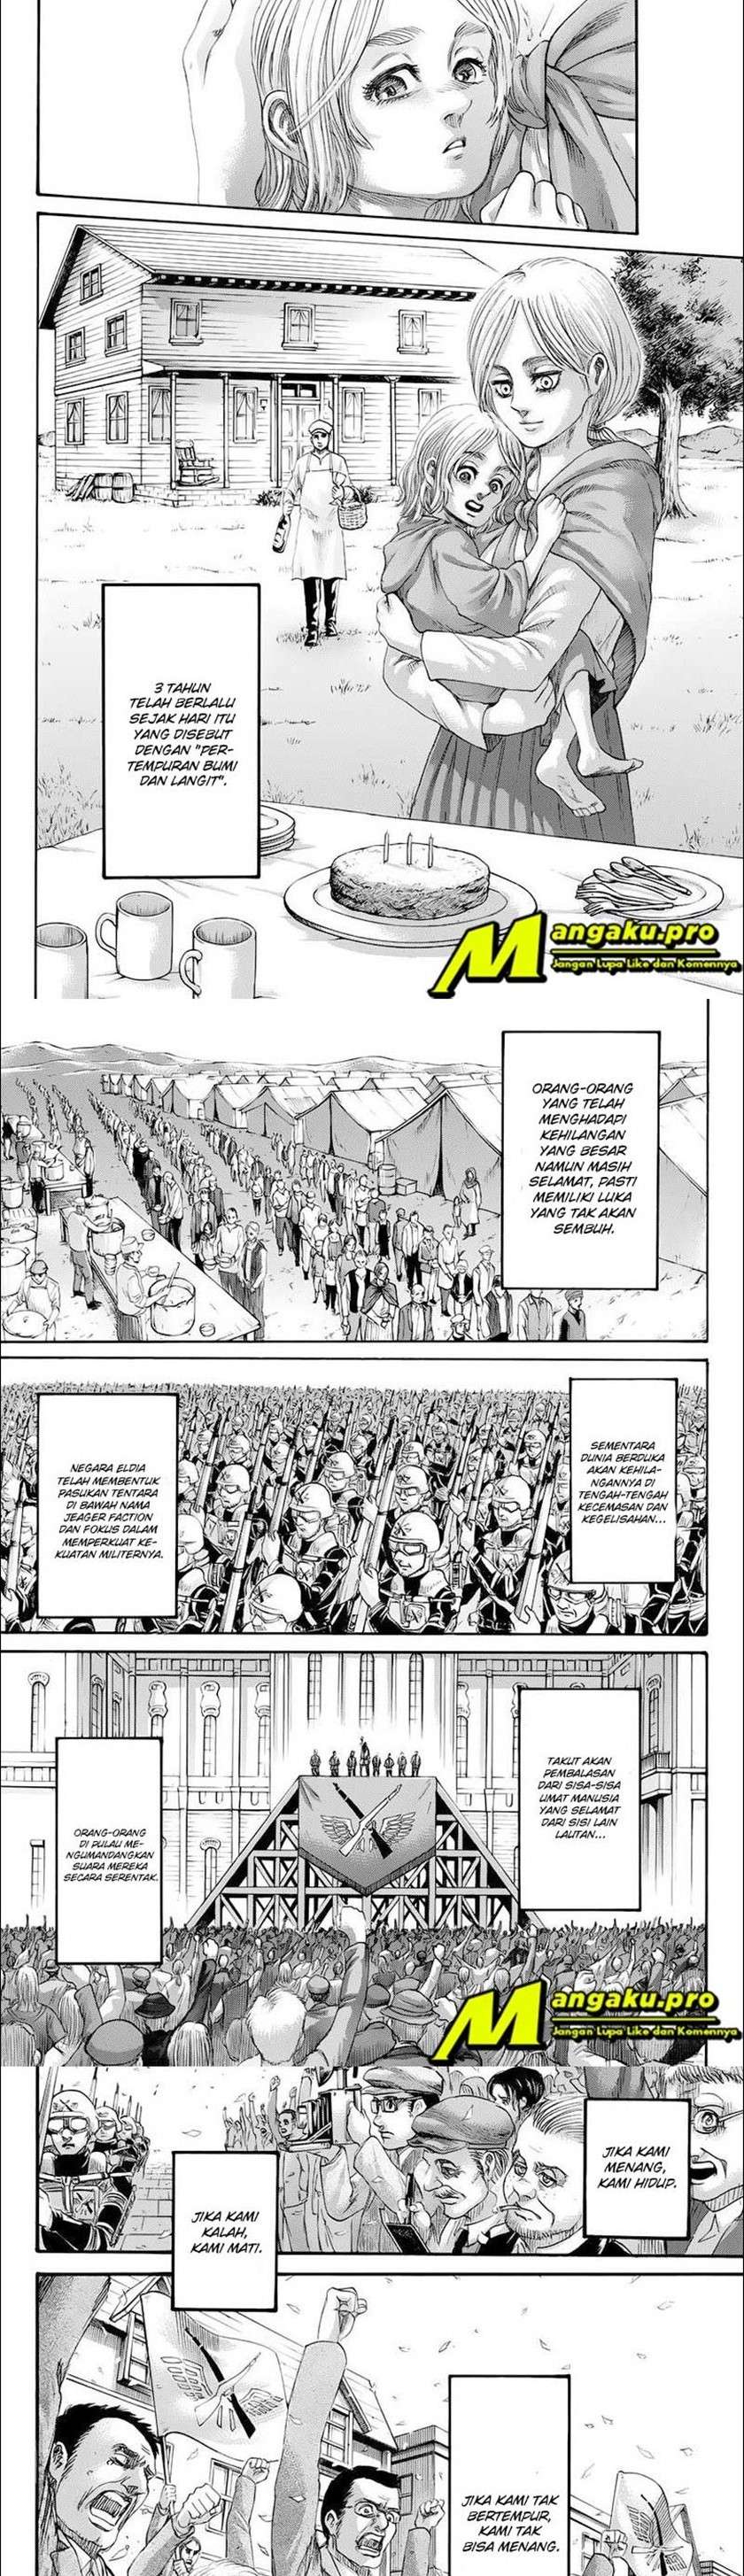 Shingeki no Kyojin Chapter 139.2 – end